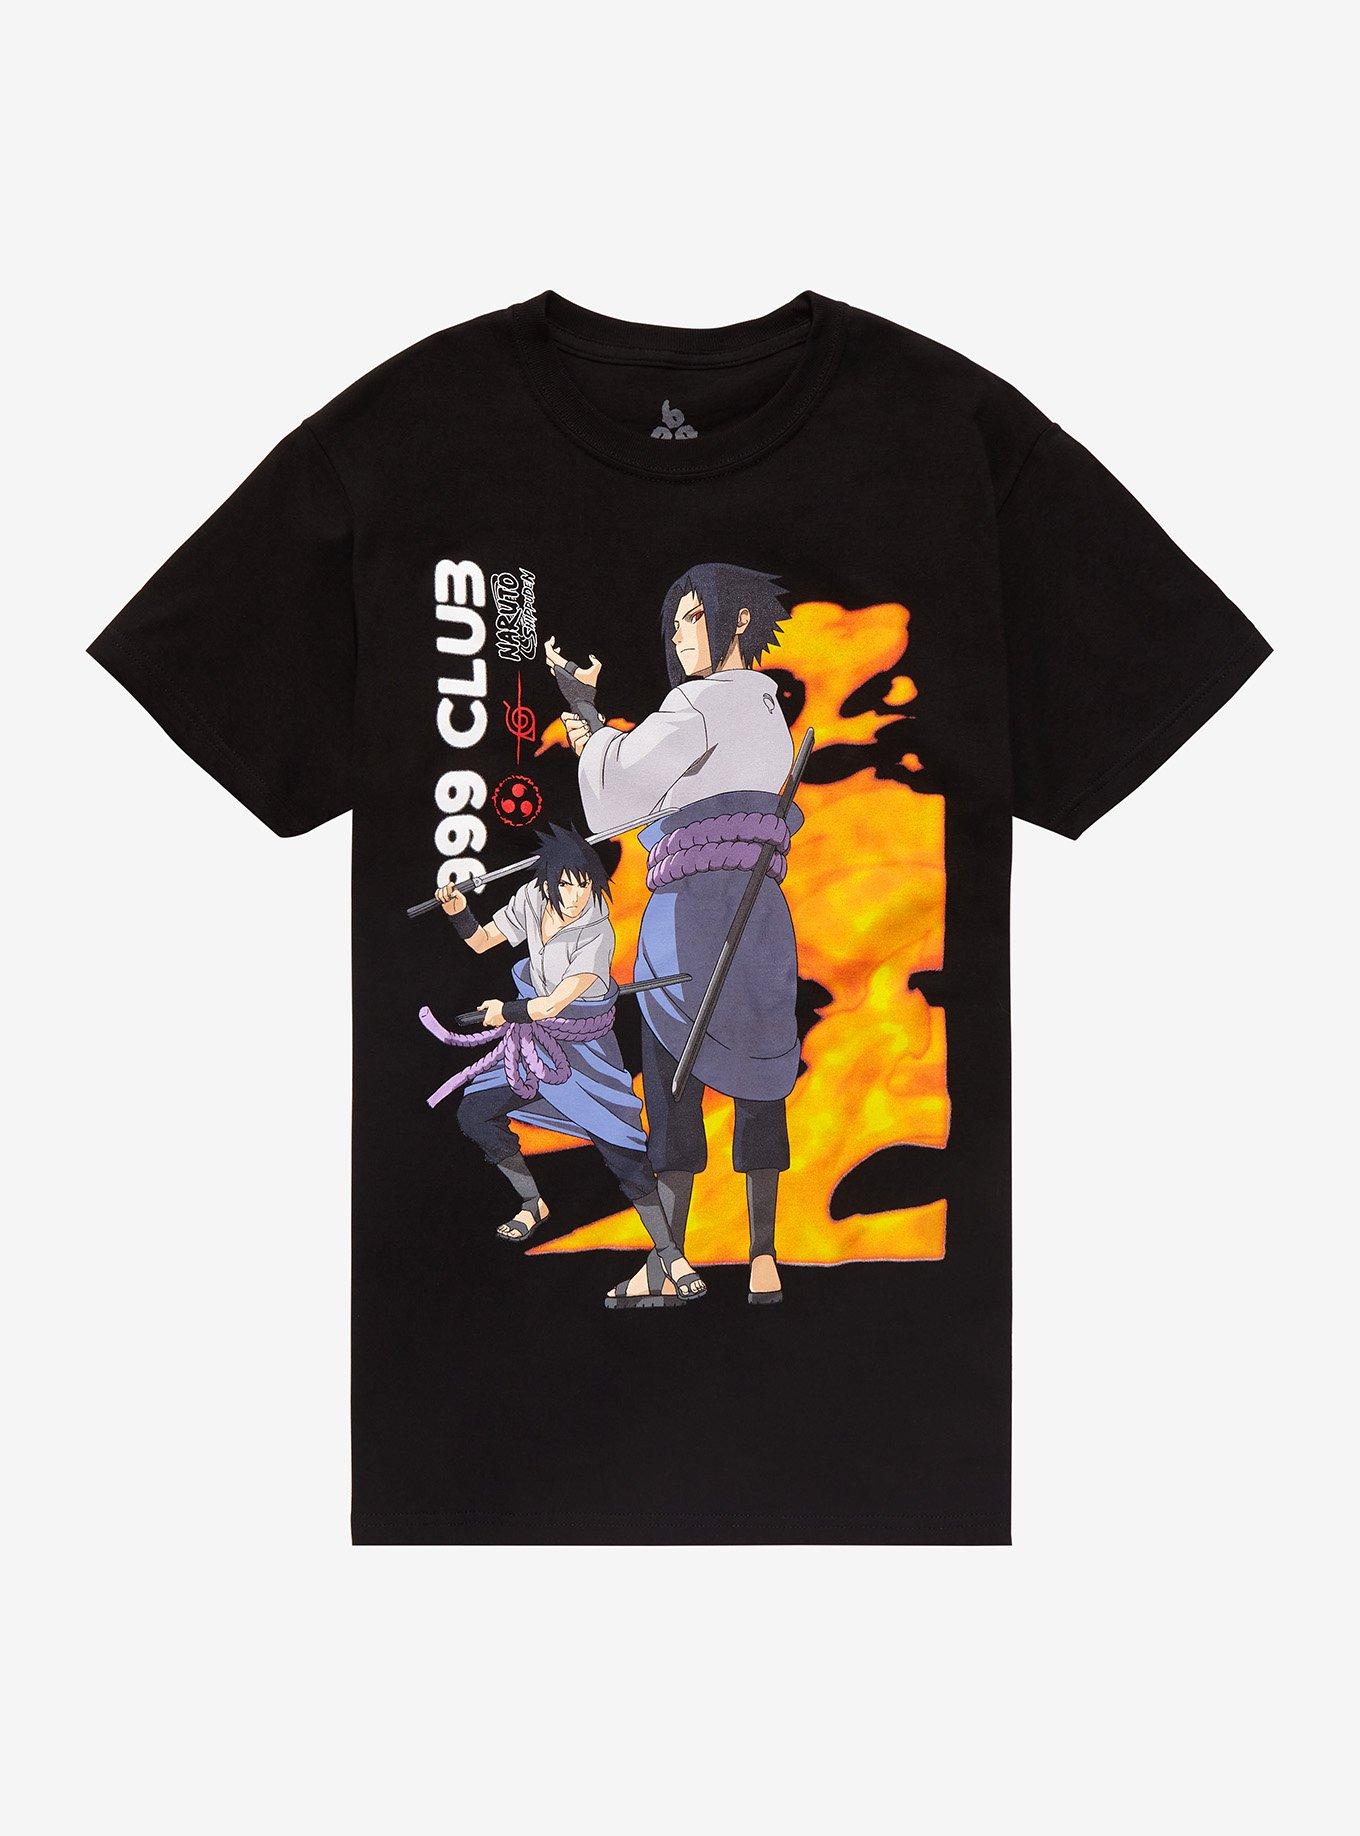 999 By Juice WRLD X Naruto Sasuke T-Shirt Hot Topic Exclusive | Hot Topic